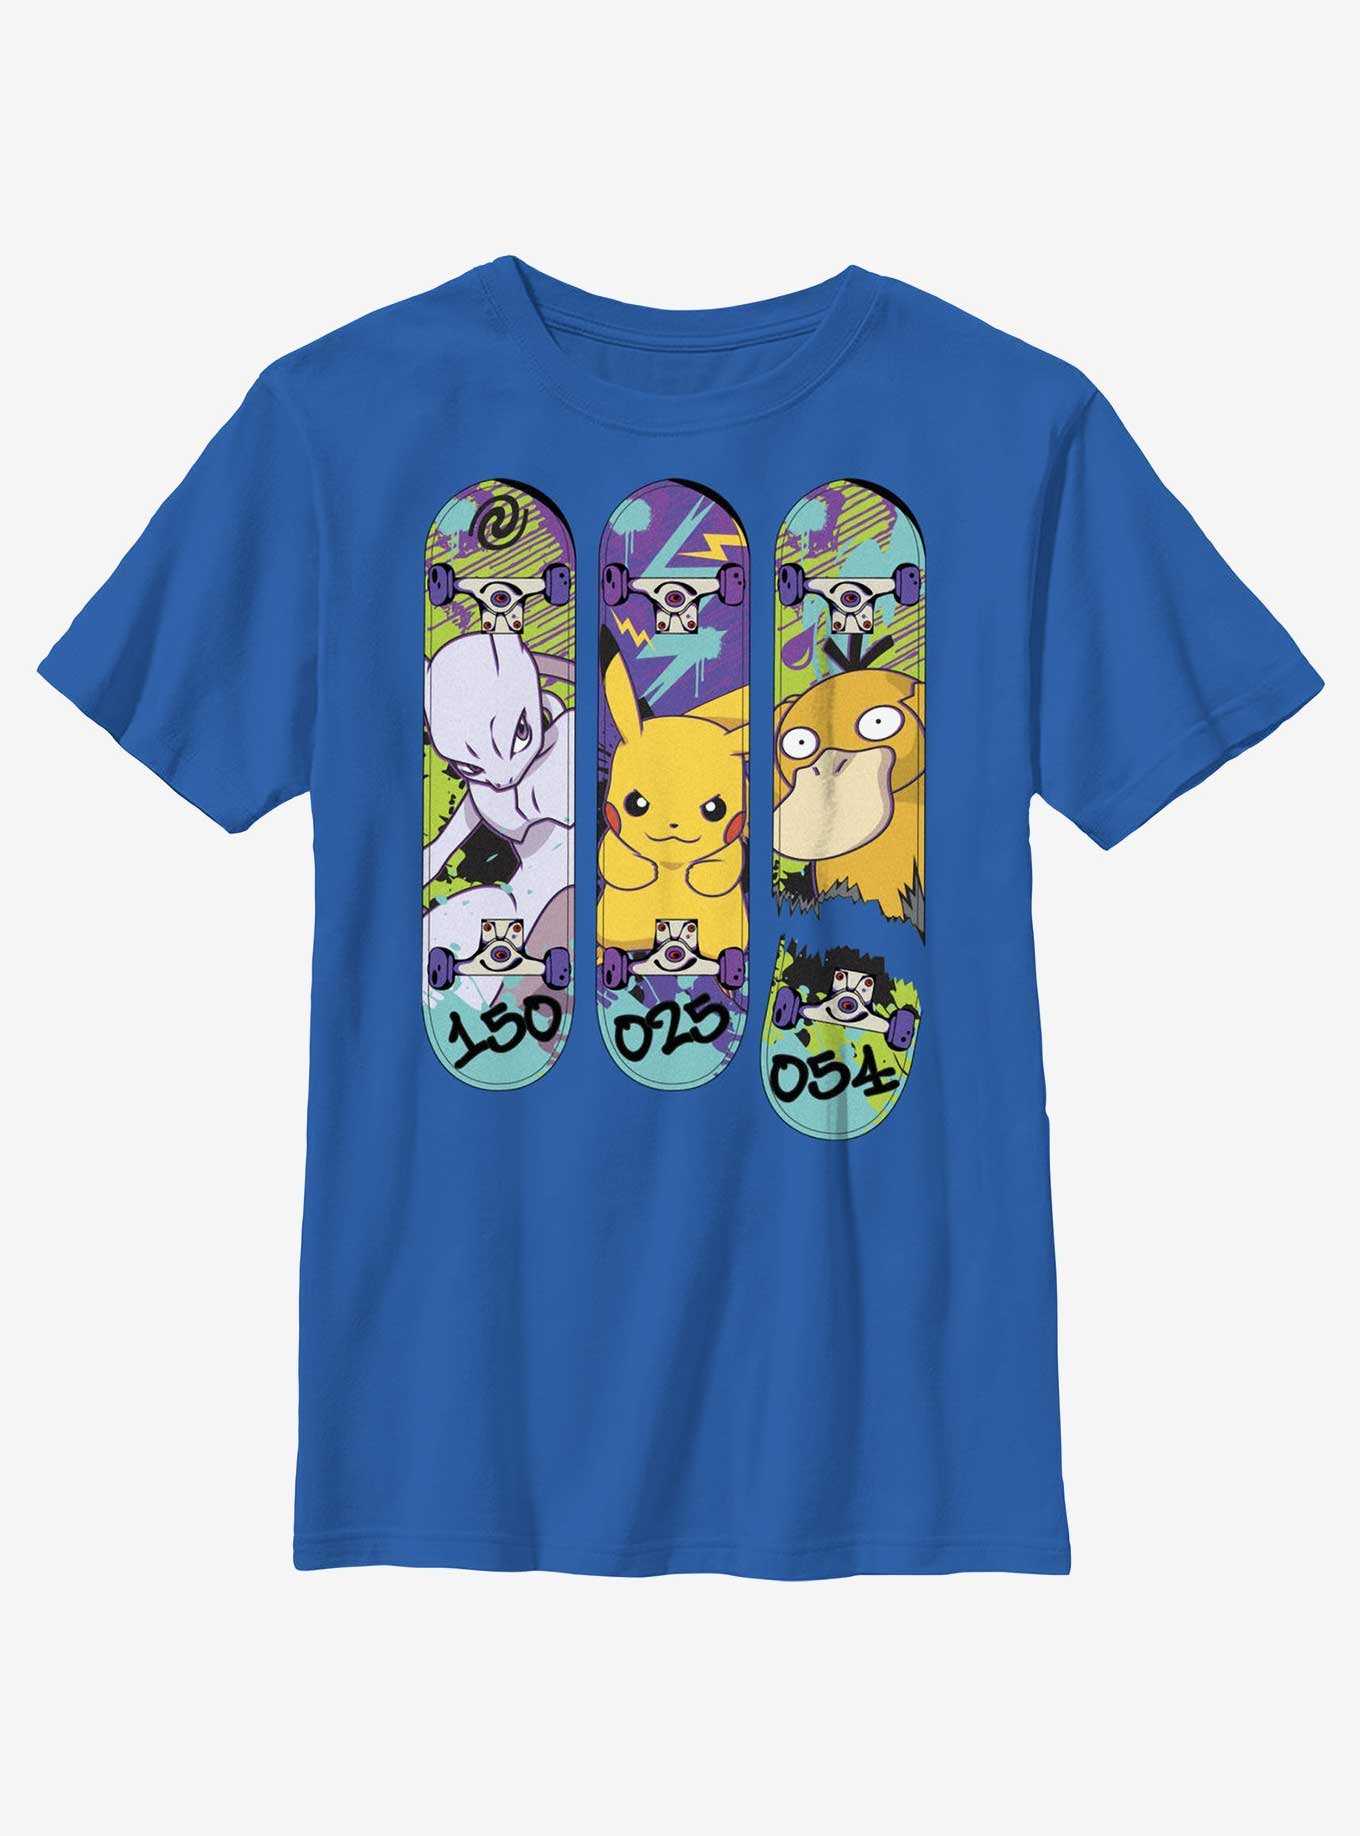 Pokemon Mewtwo, Pikachu, and Psyduck Skateboard Deck Art Youth T-Shirt, , hi-res